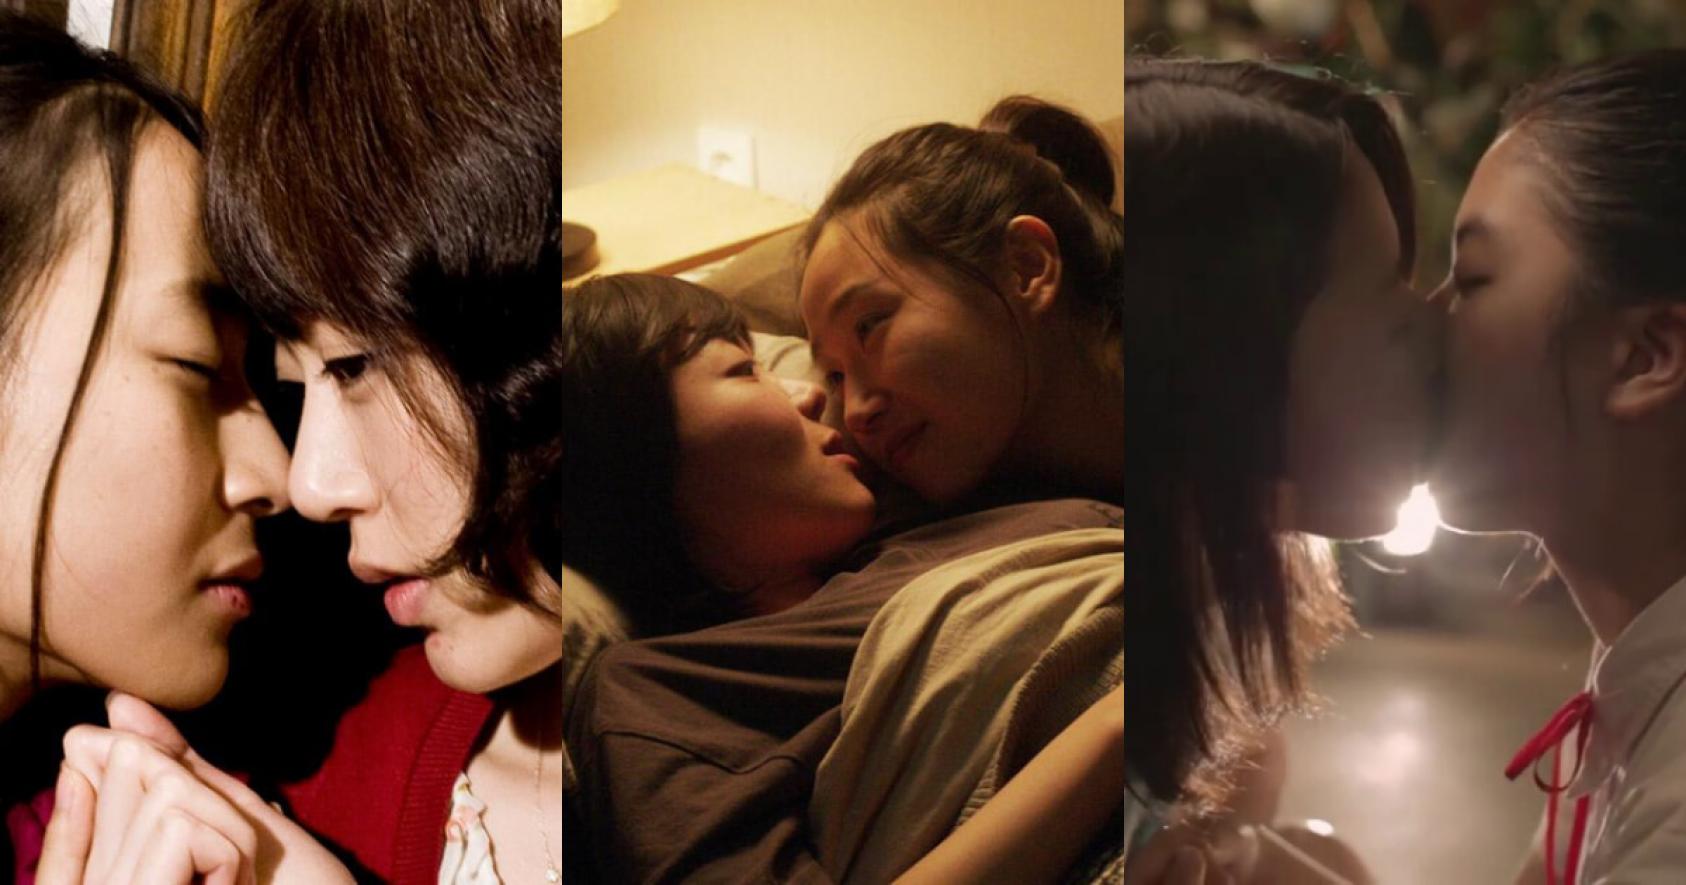 Korean Lesbian Films 3 Love Stories About Women Discovering Their True.